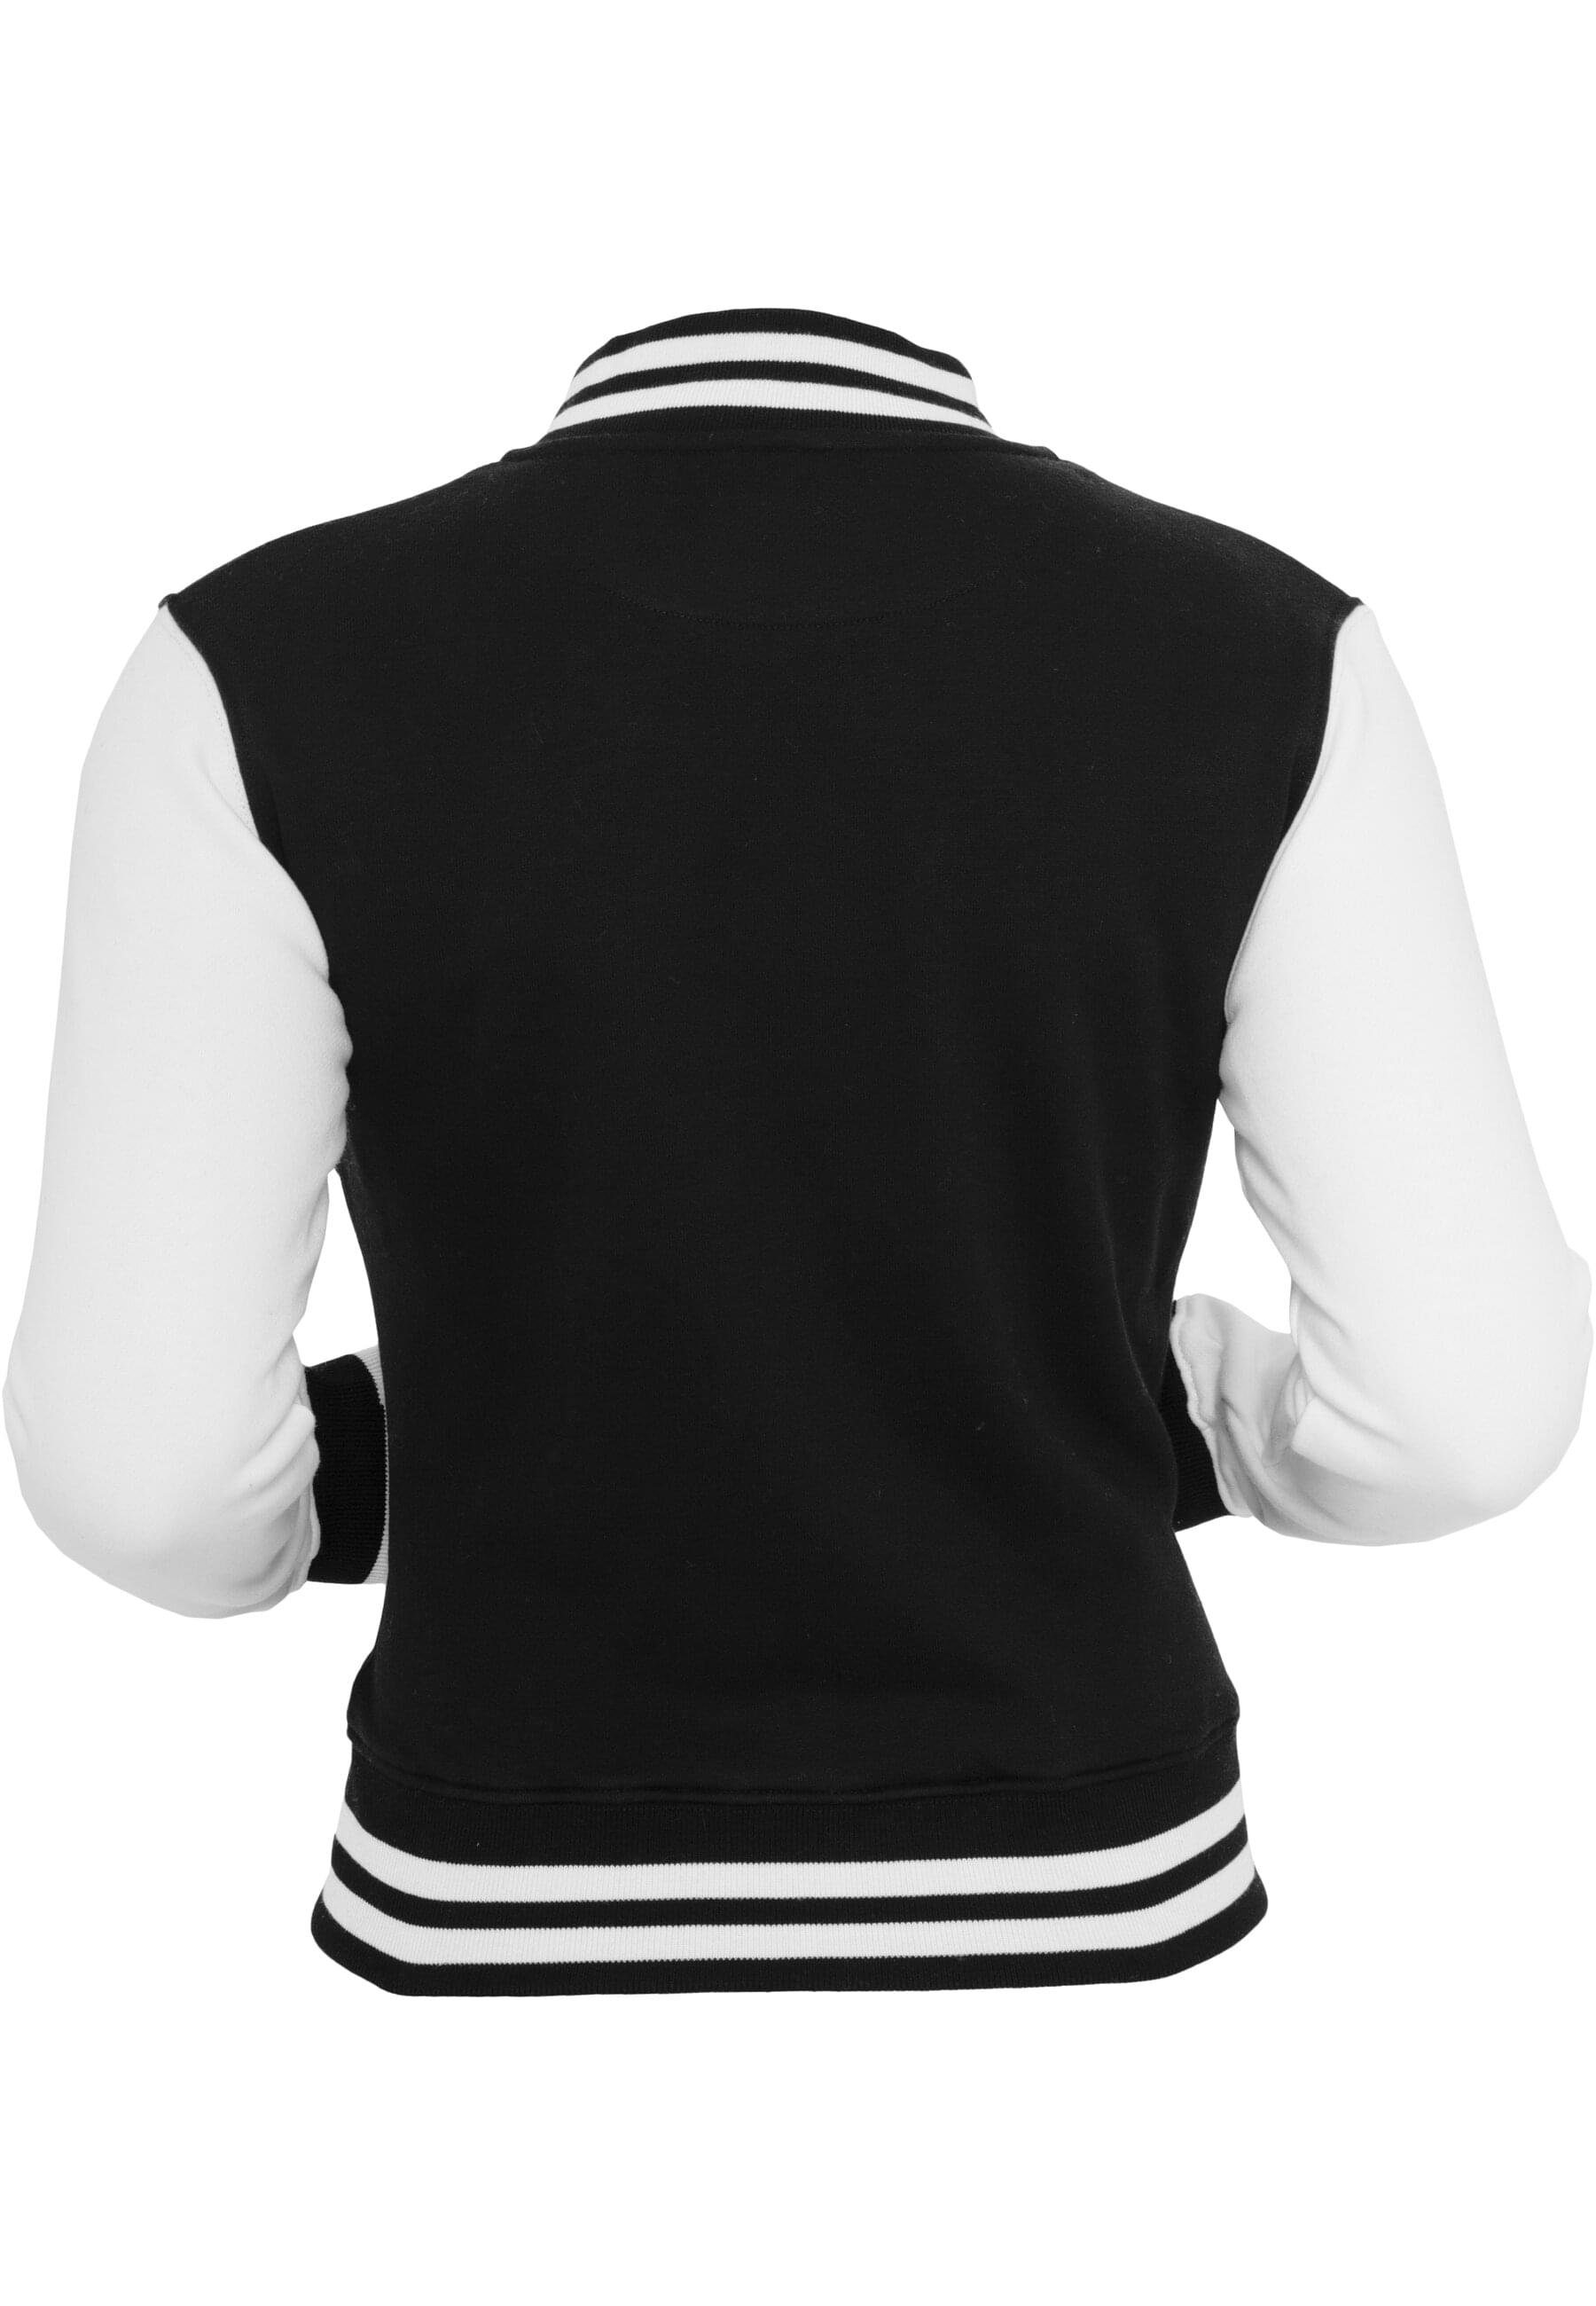 (1-St) URBAN 2-tone CLASSICS Sweatjacket Ladies Outdoorjacke College Damen